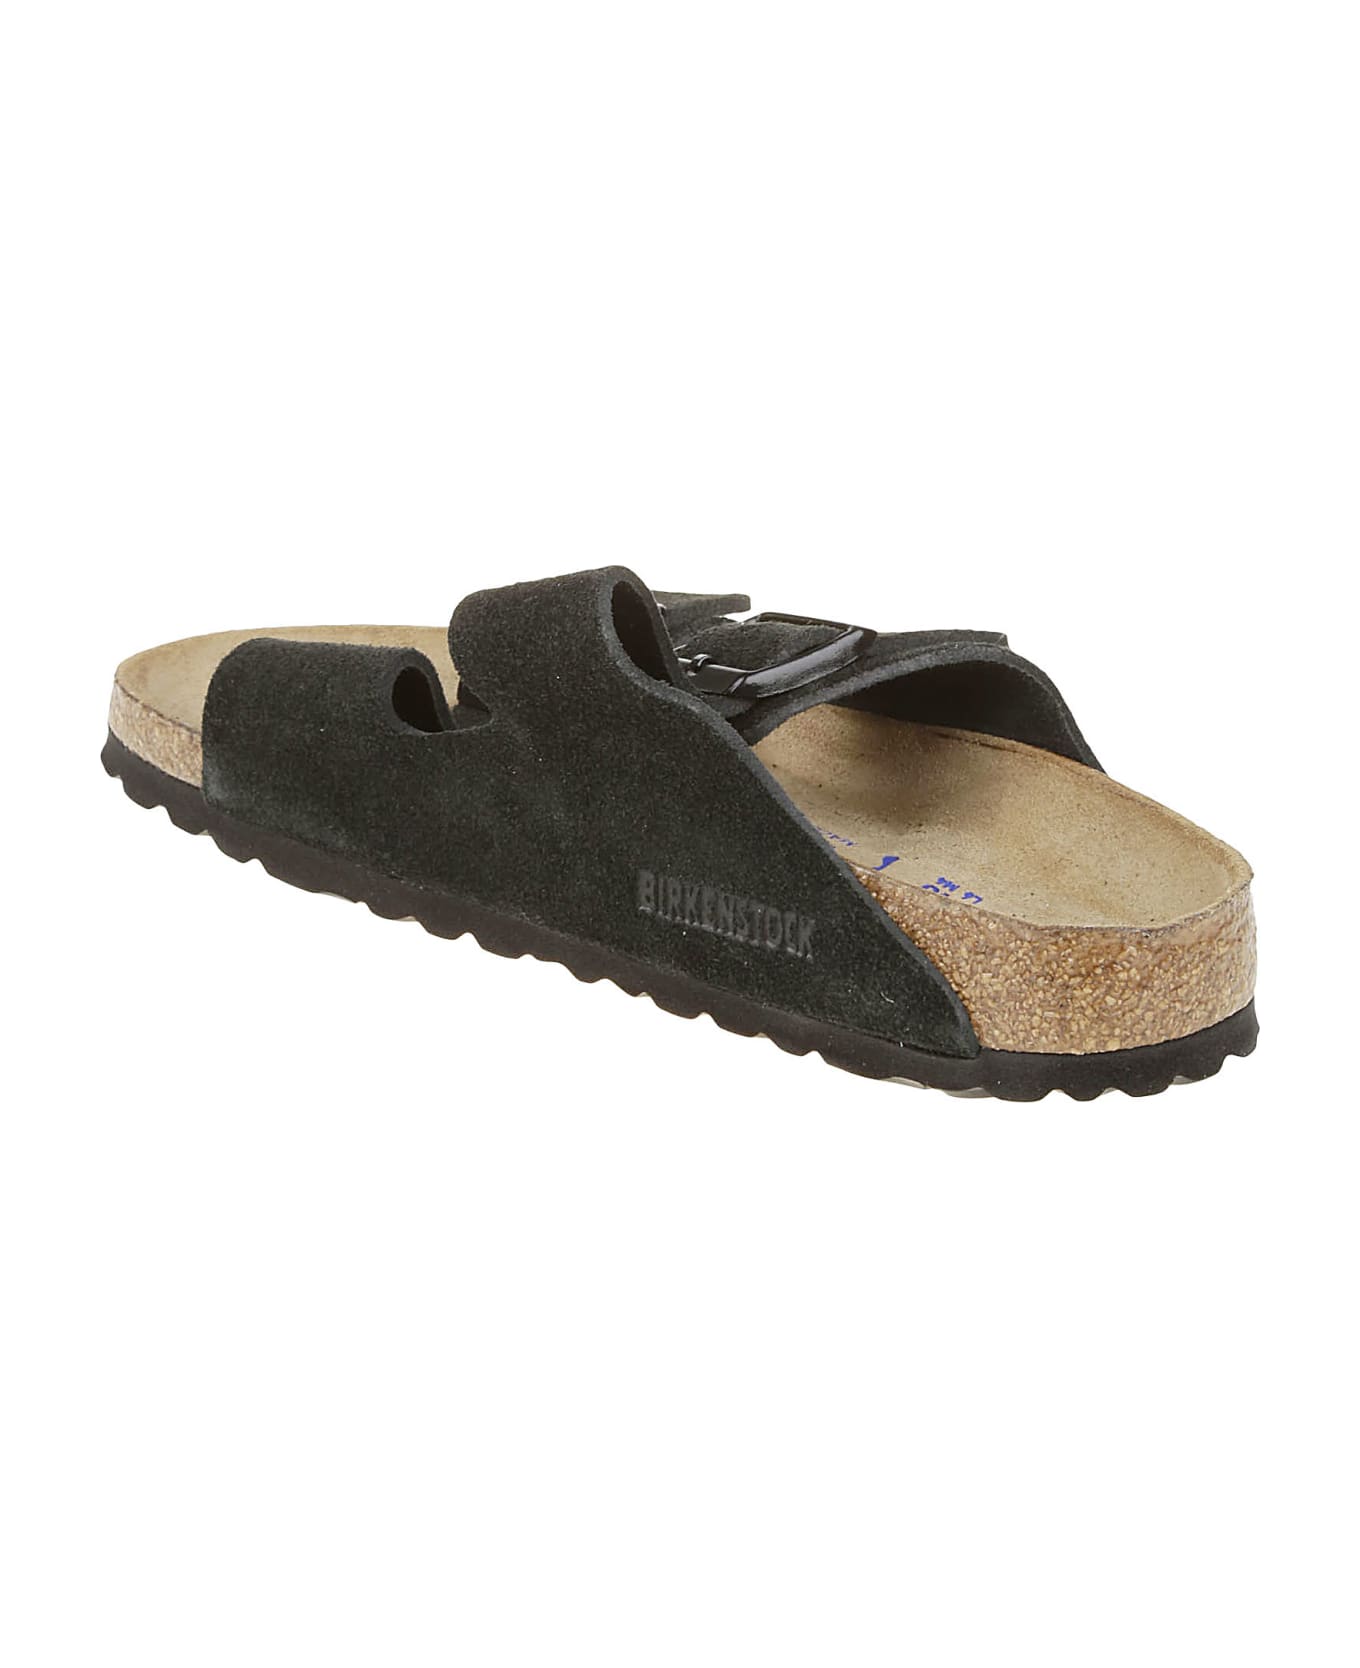 Birkenstock Arizona Sandals - Black サンダル